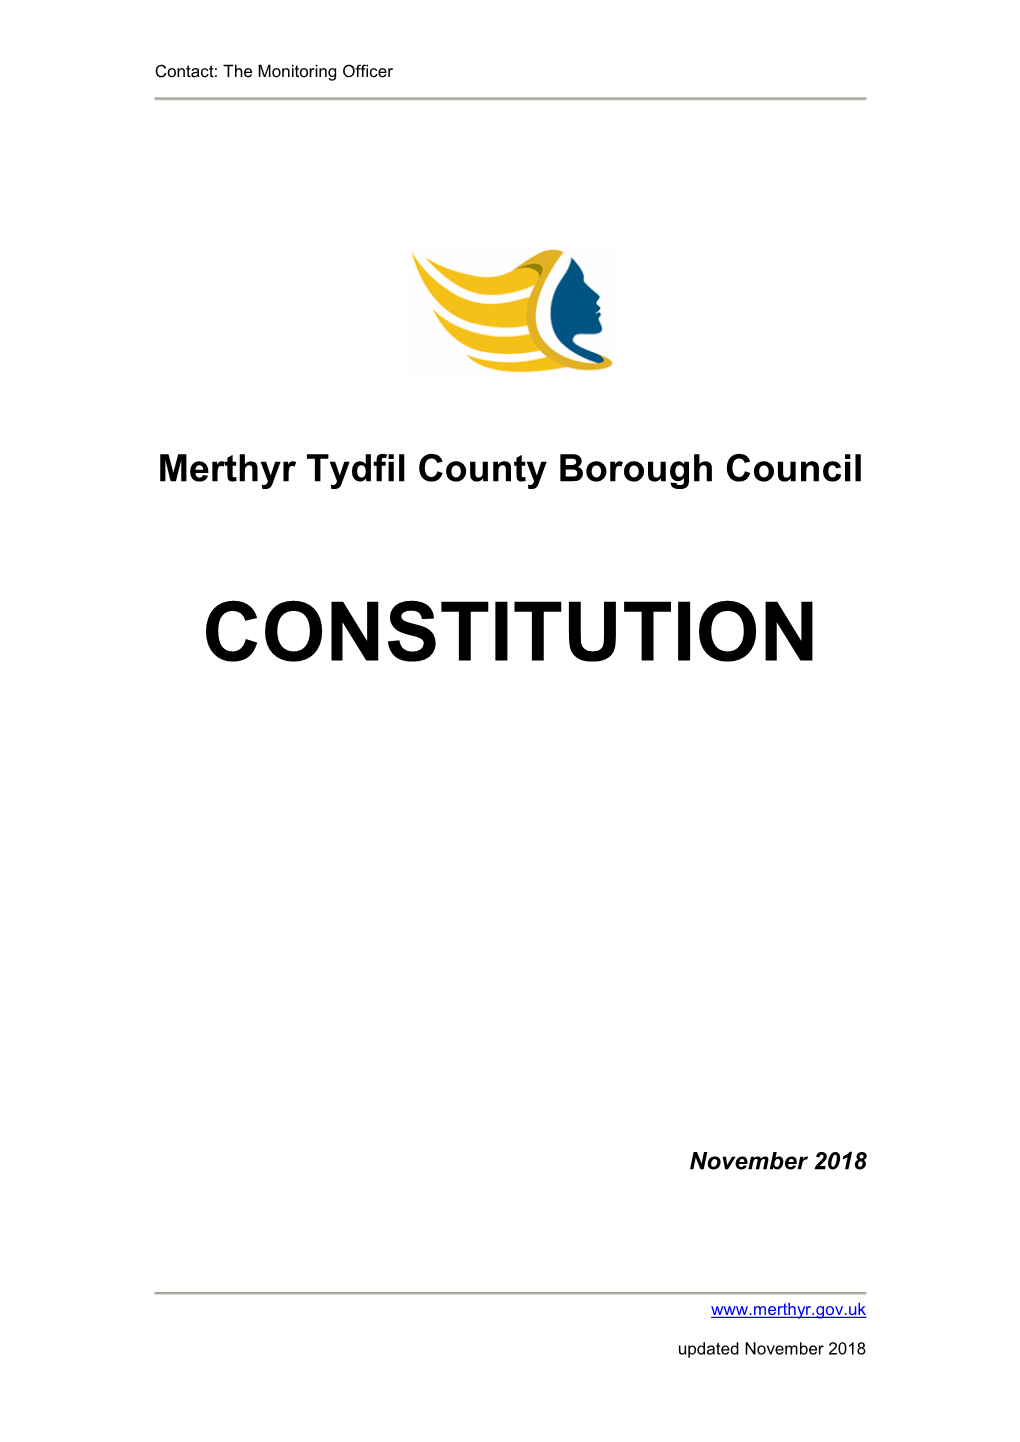 Merthyr Tydfil County Borough Council Constitution 2018